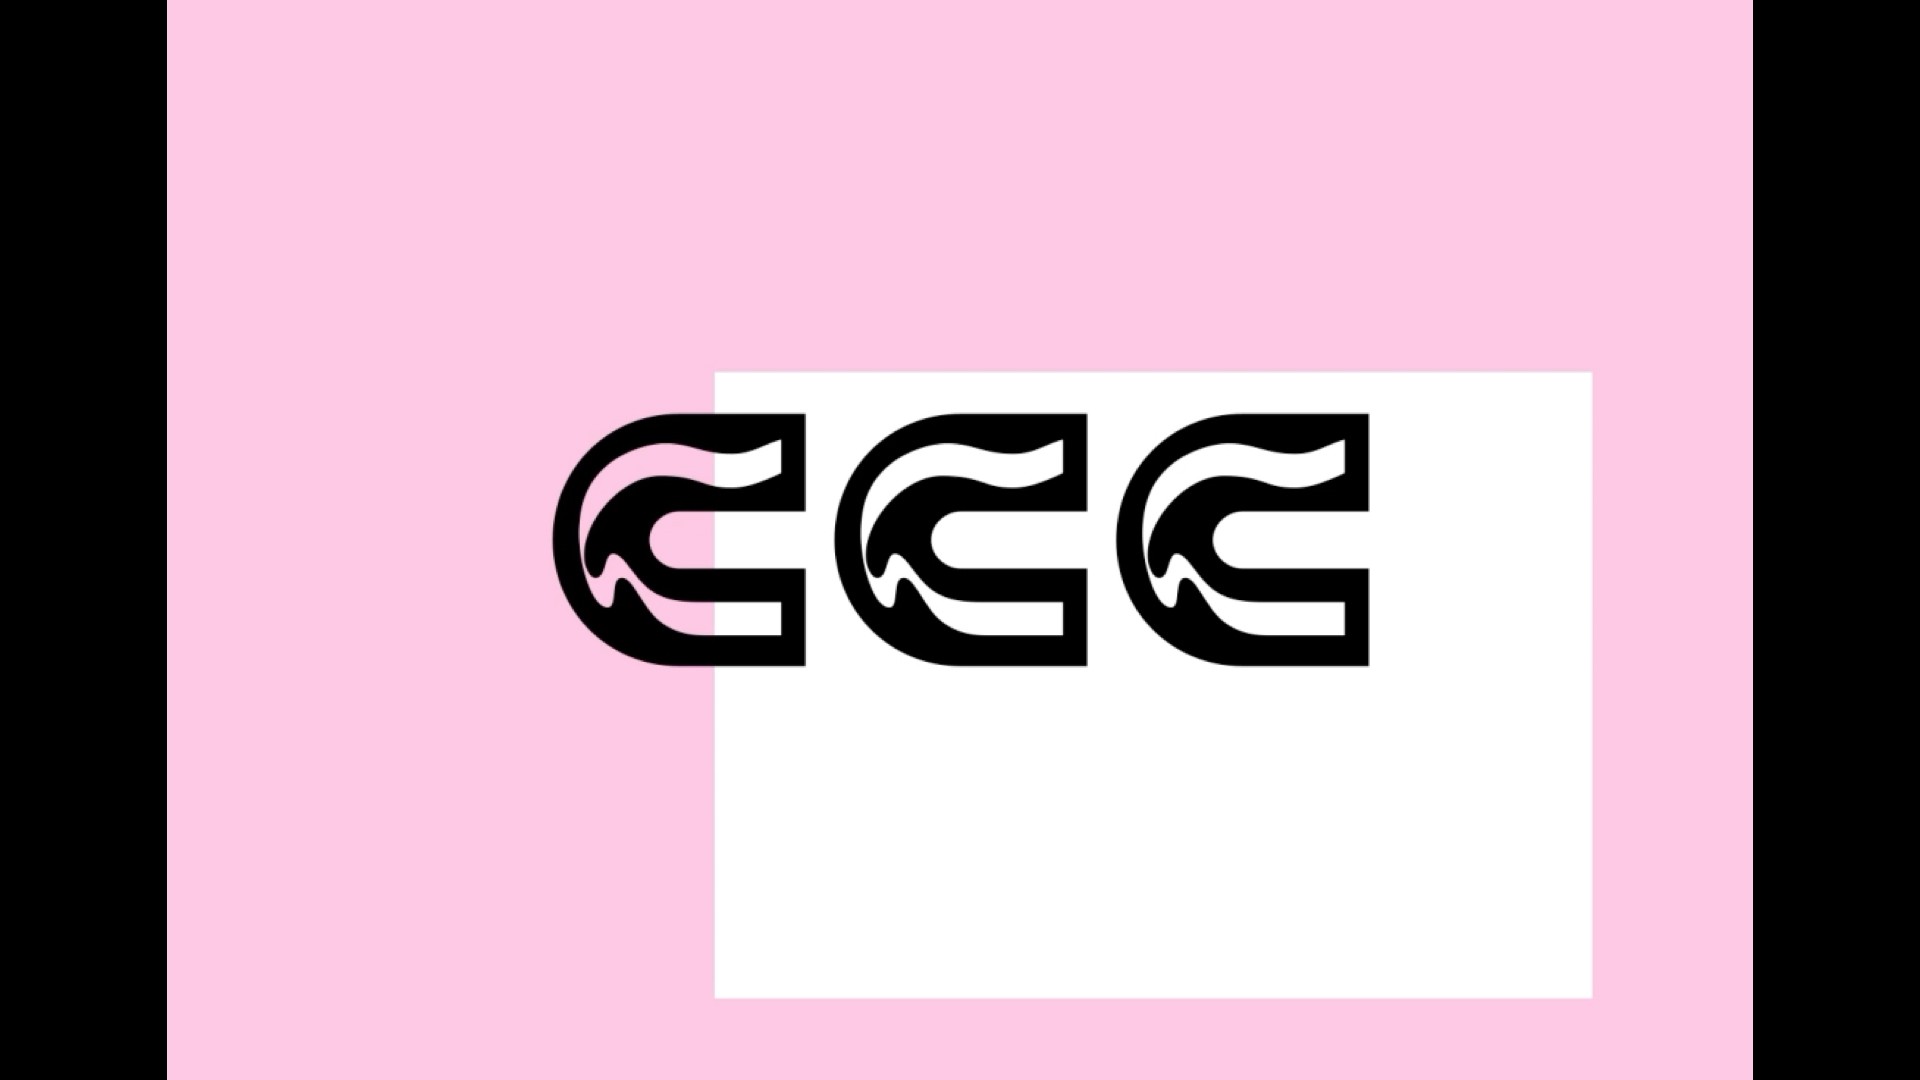 The CCC logo.